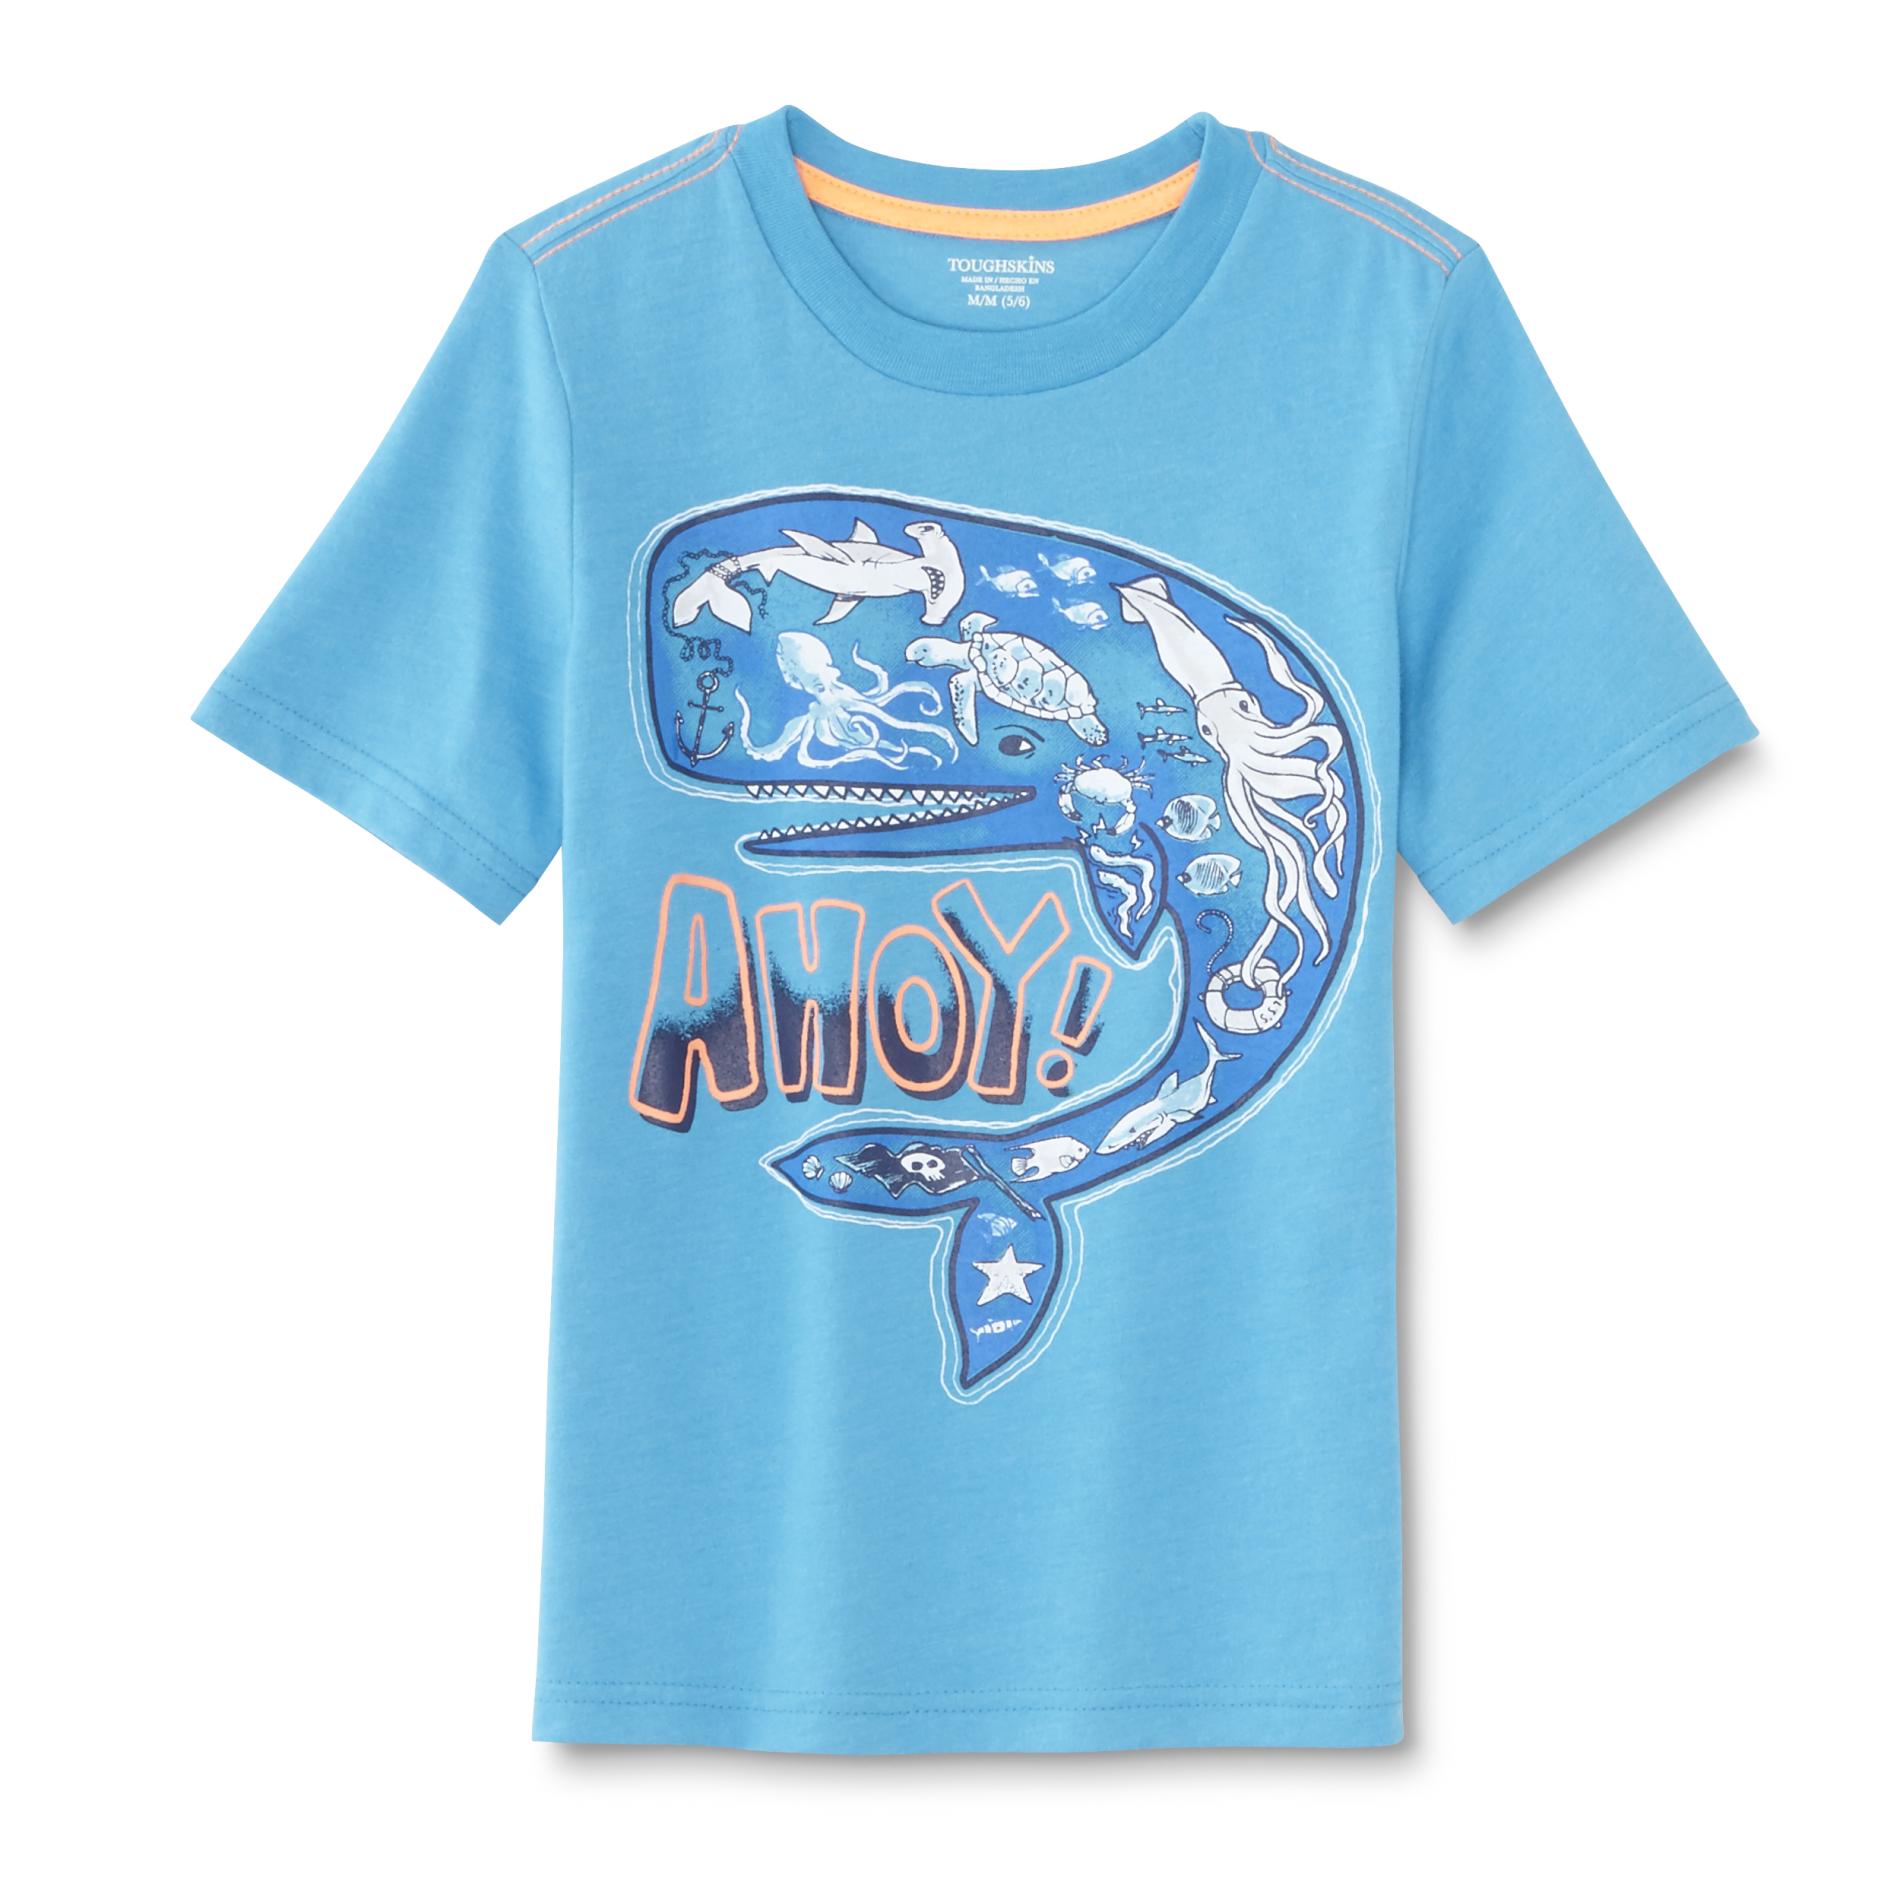 Toughskins Infant & Toddler Boy's Graphic T-Shirt - Ahoy